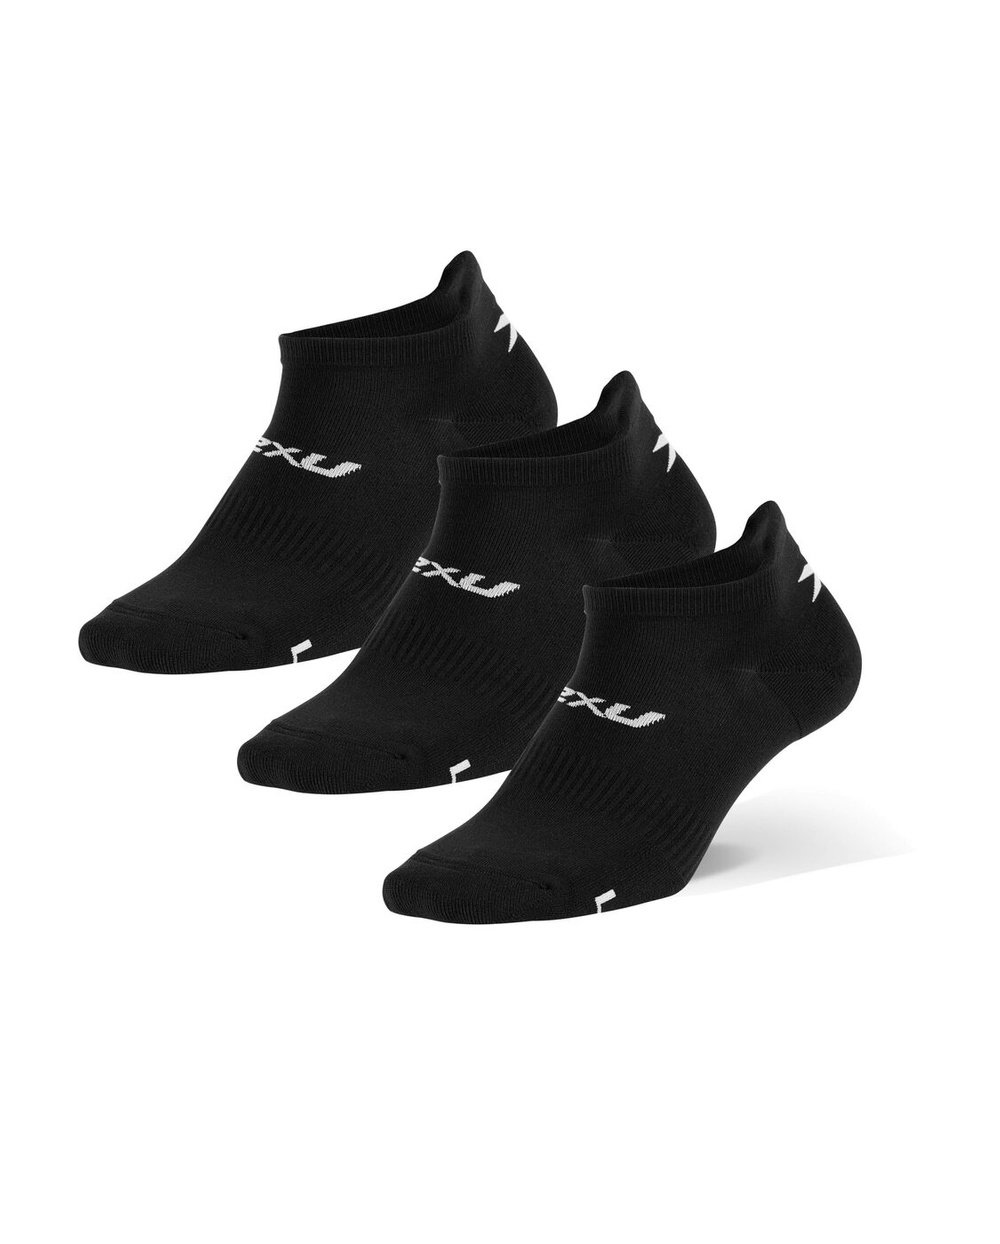 Ankle Socks 3 pack "Black/White" - 2XU